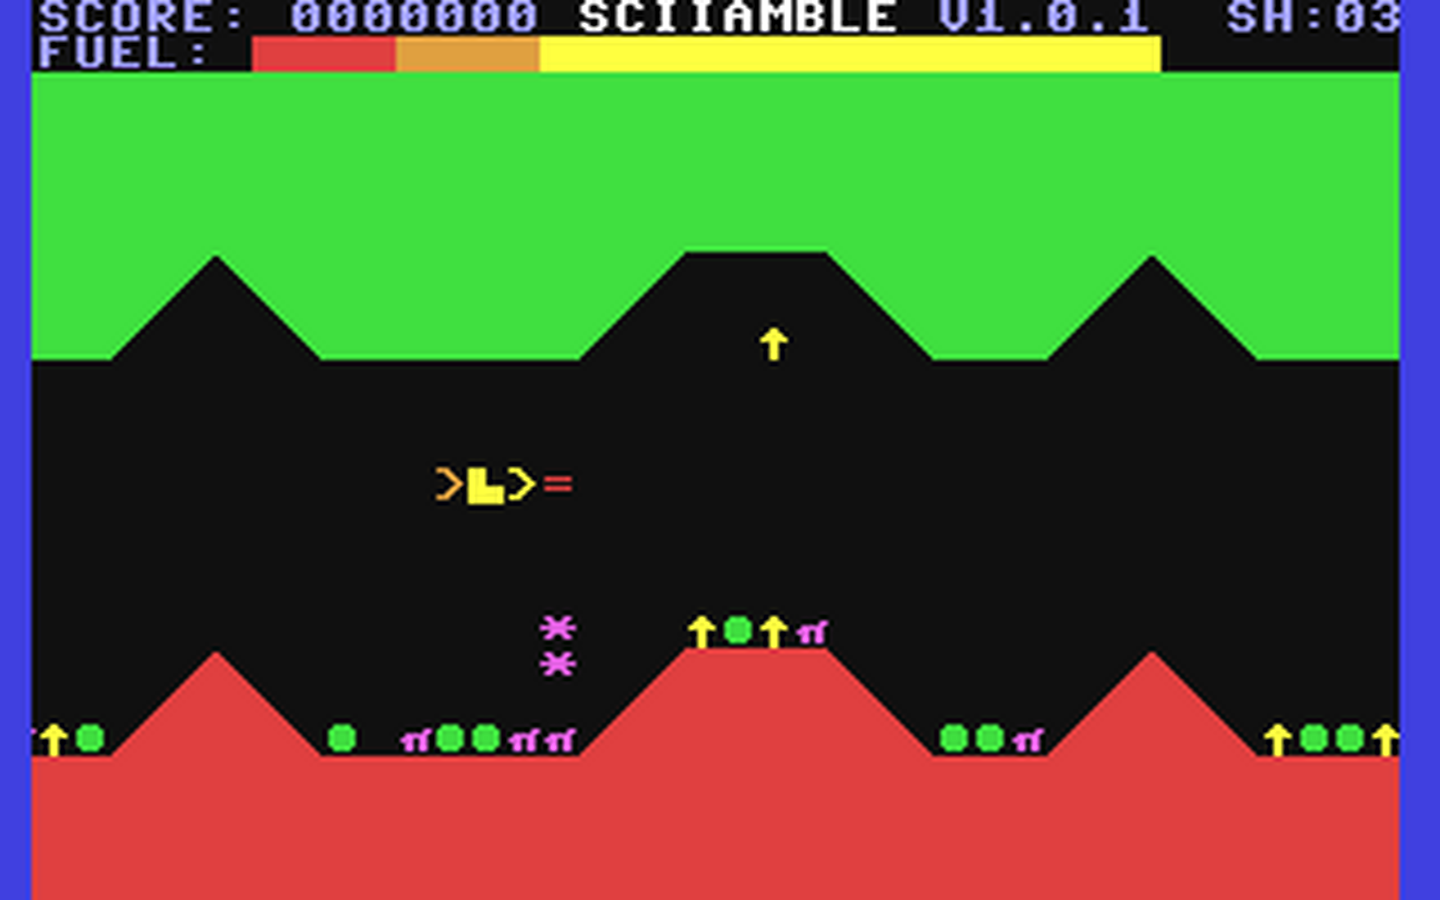 C64 GameBase SCIIamble PhoenixWare 2021